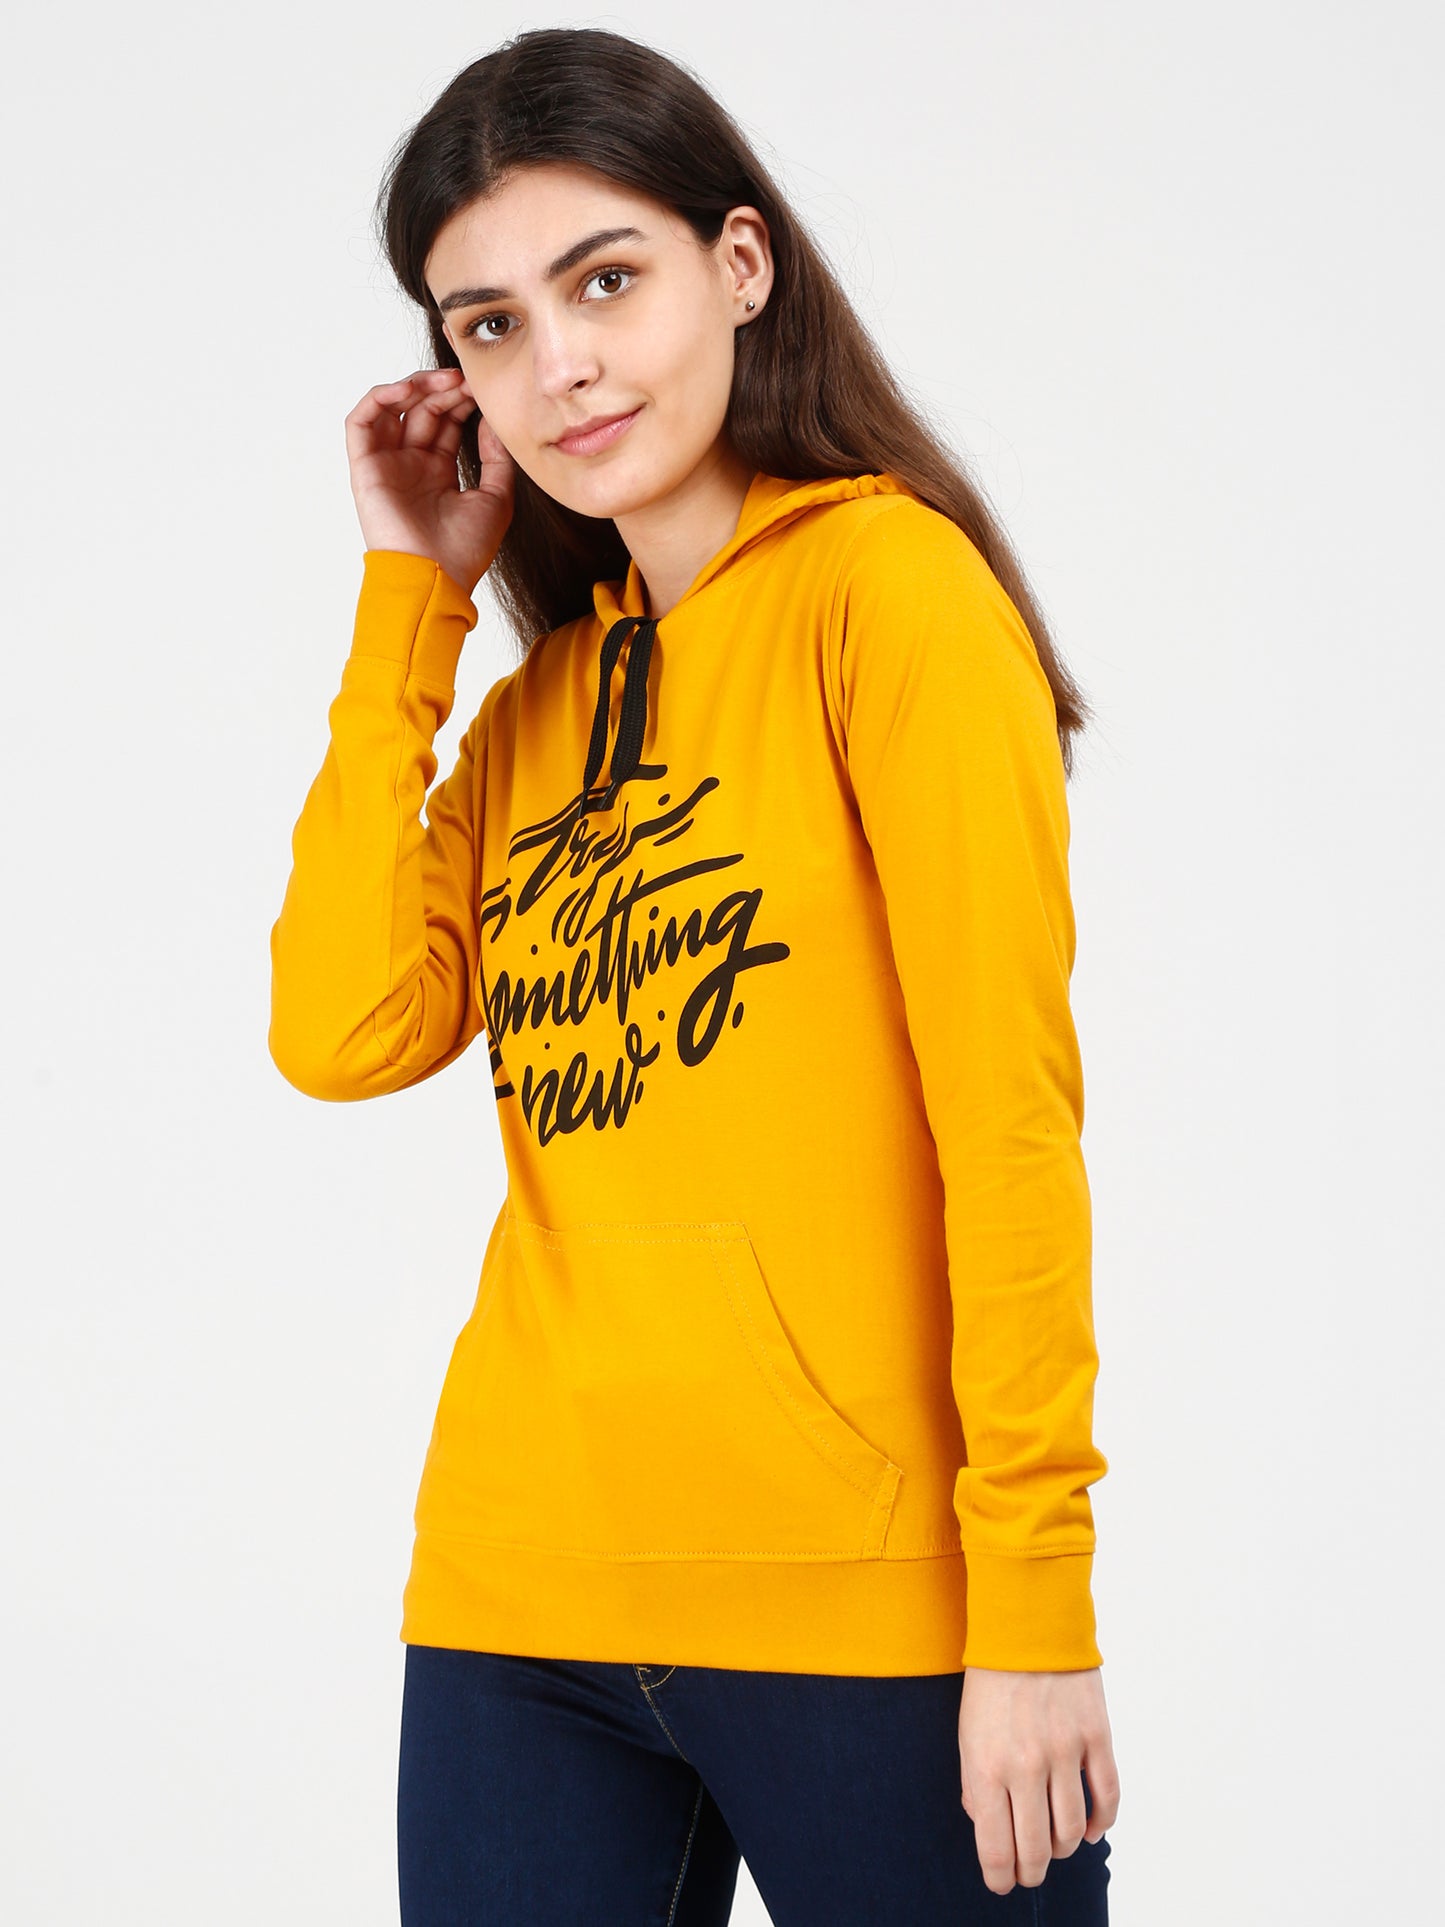 Women's Cotton Printed Full Sleeve Mustard Yellow Color Sweatshirt/Hoodies